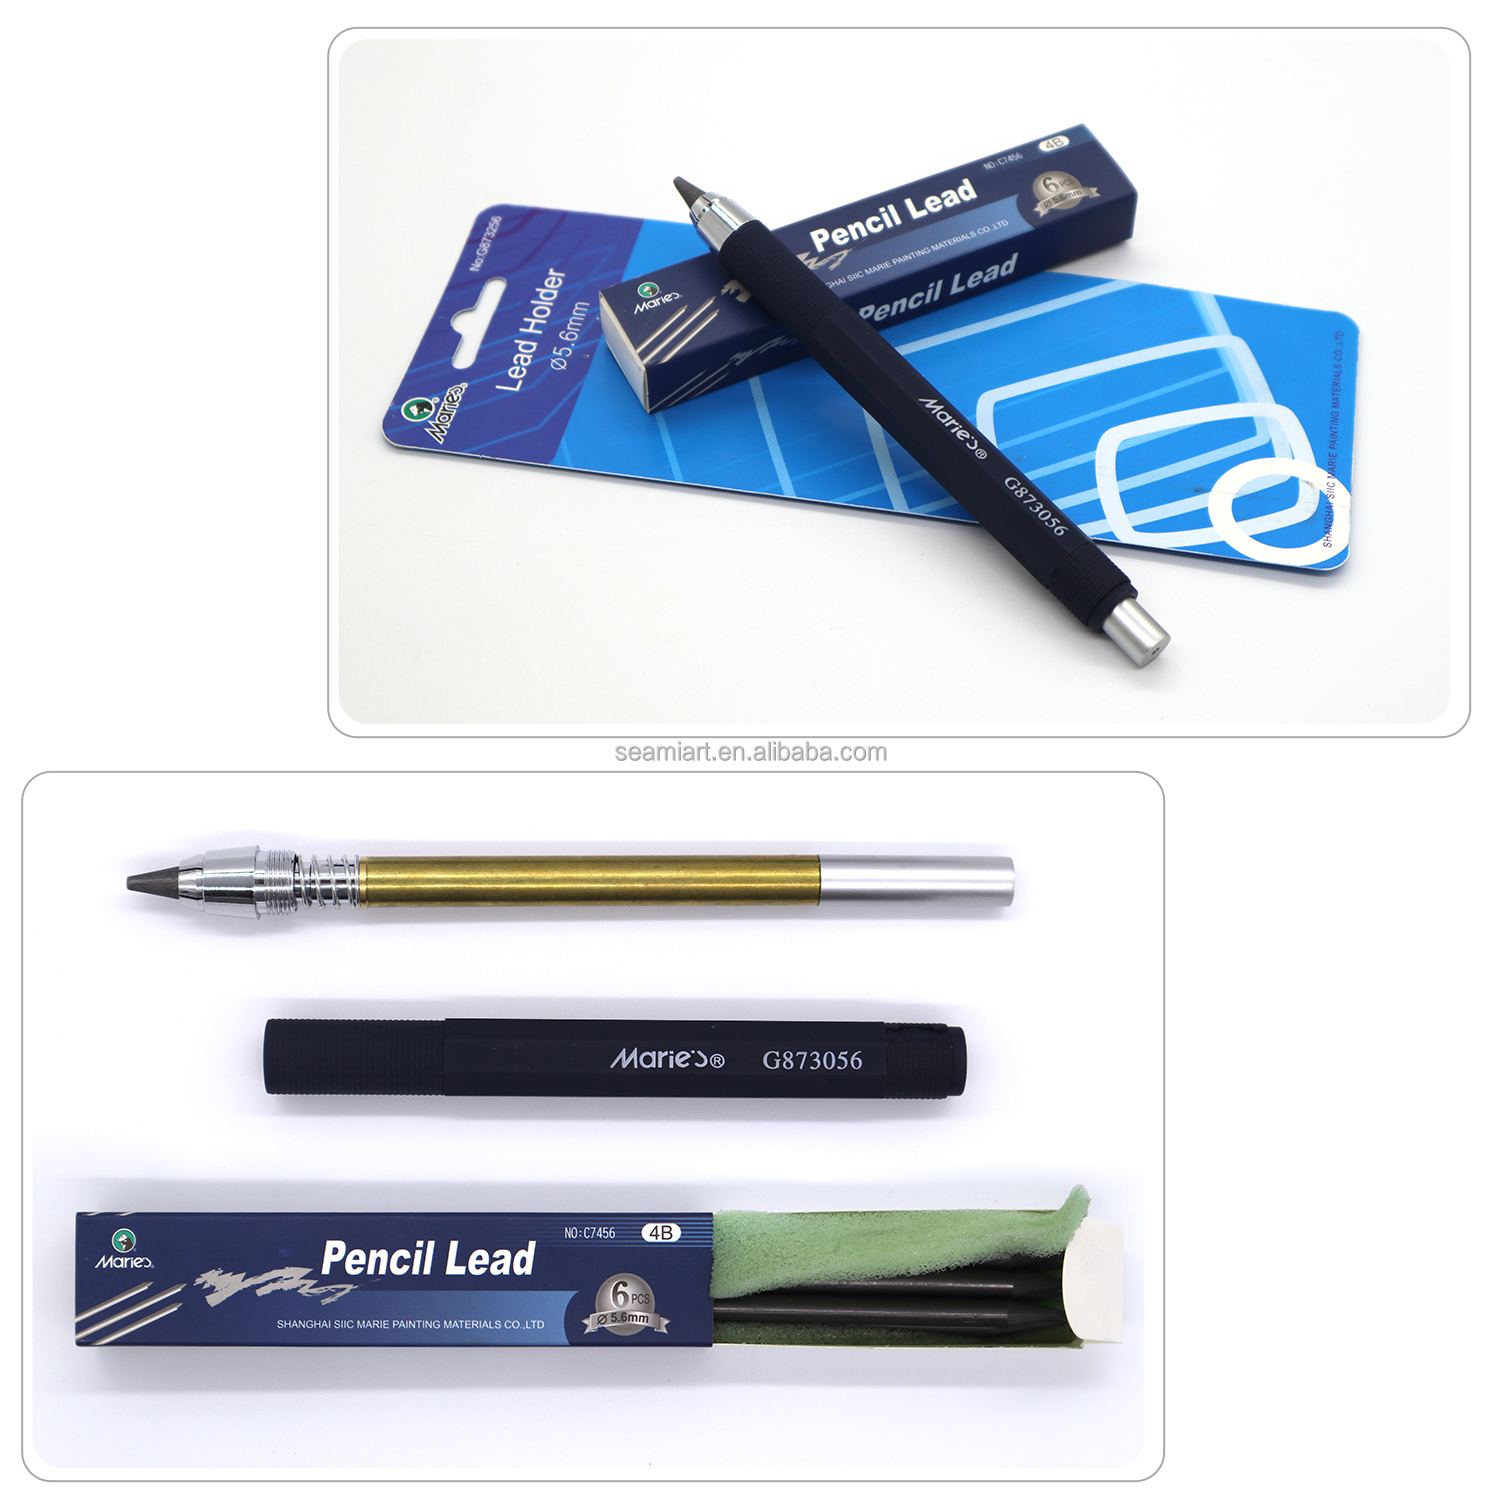 1pc 5.6 mm Conjunto de lápices automático 4B para el lápiz mecánico Dibujo de dibujo Artista Suministros de arte1